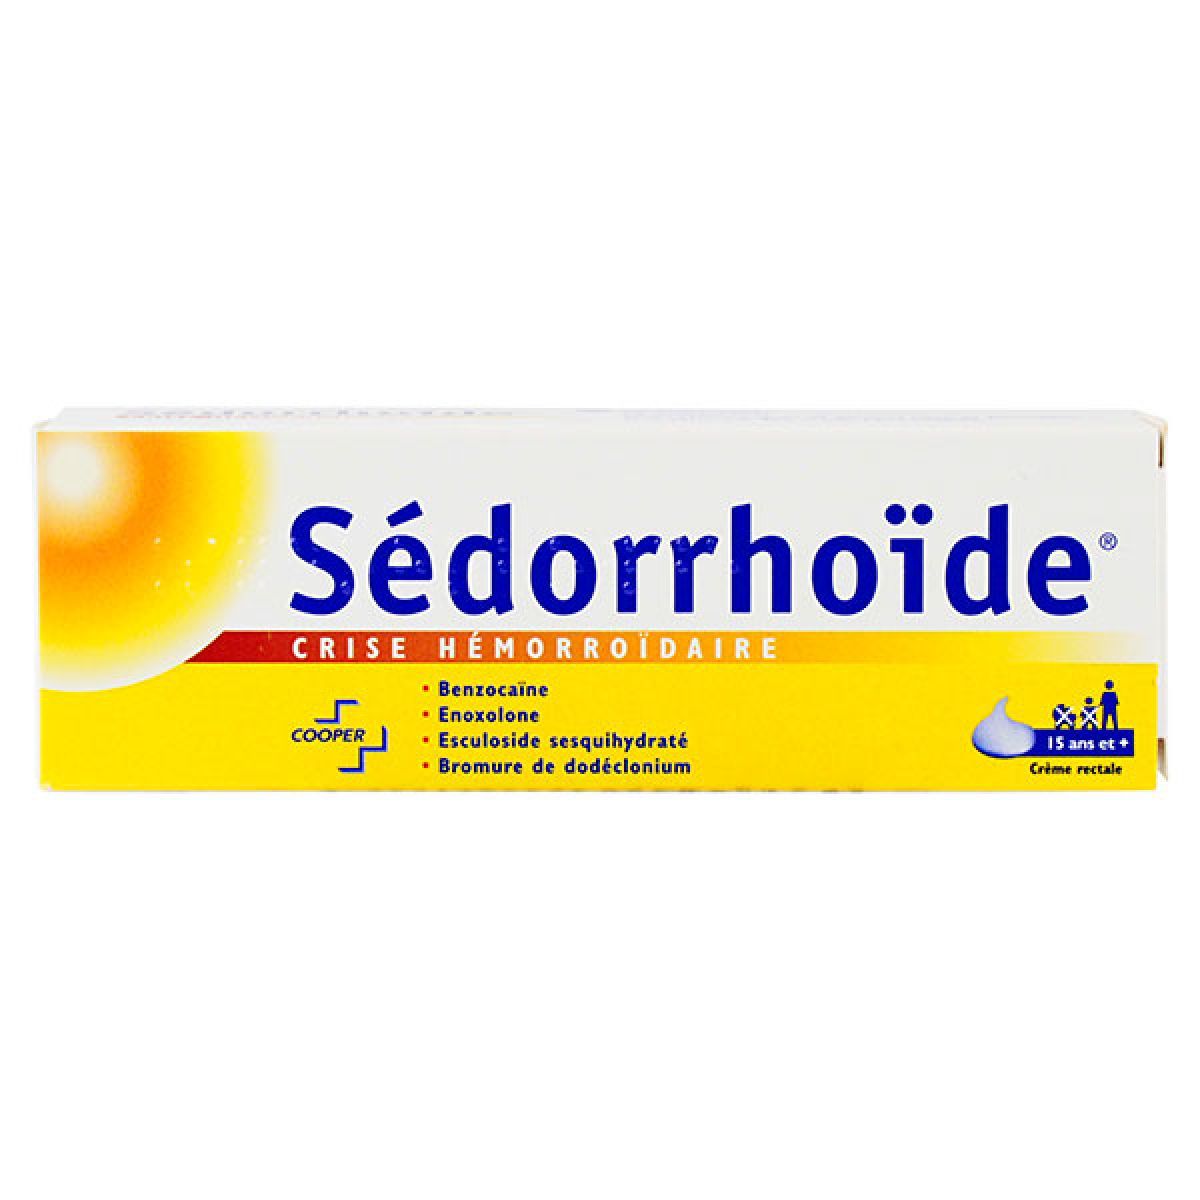 Sedorrhoide crème rectale - Pommade Hemorroides anesthésiante